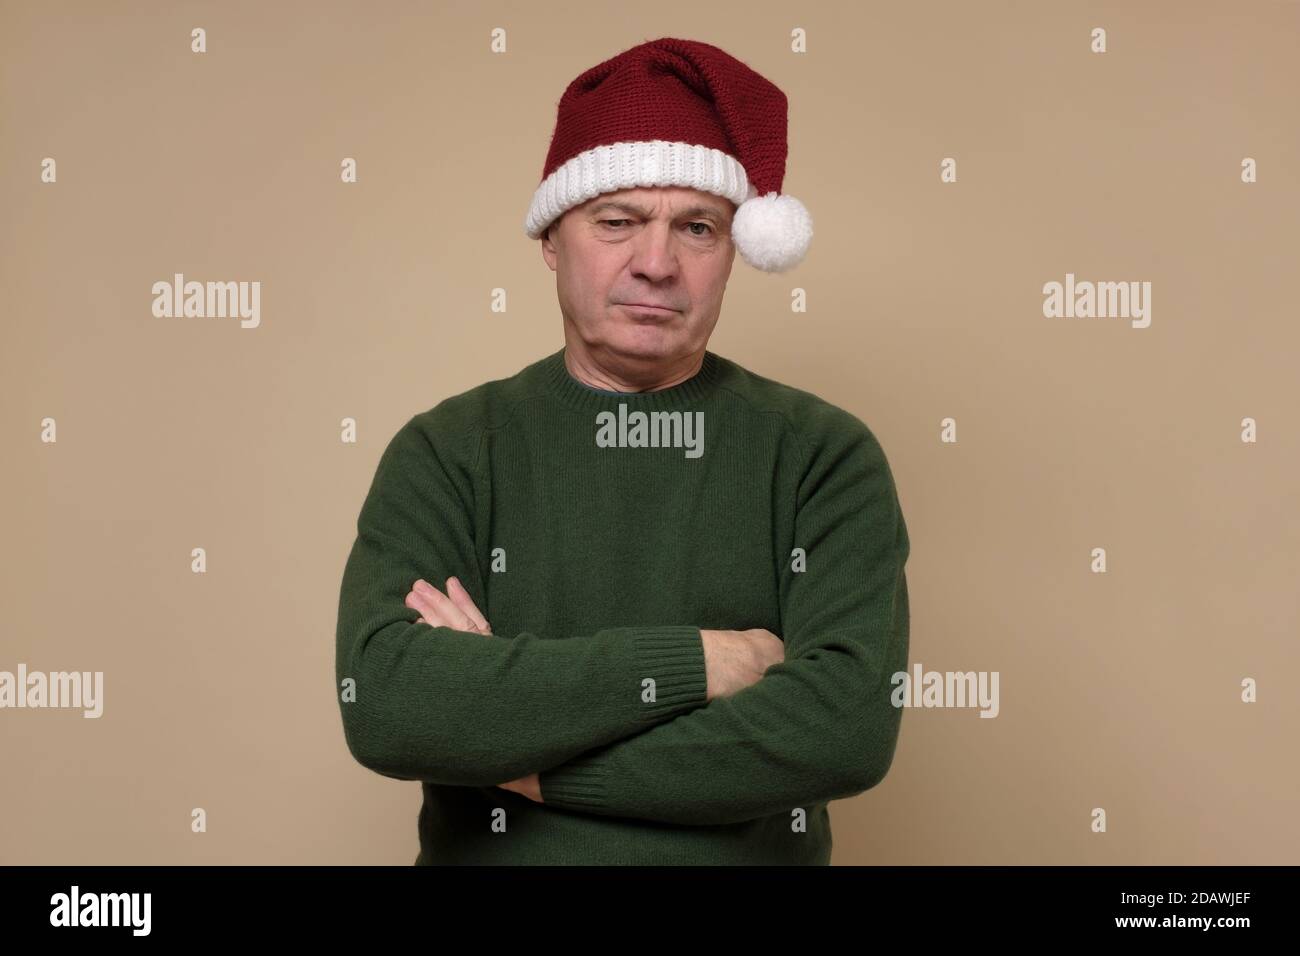 Sad senior man in santa hat looking angry. Stock Photo